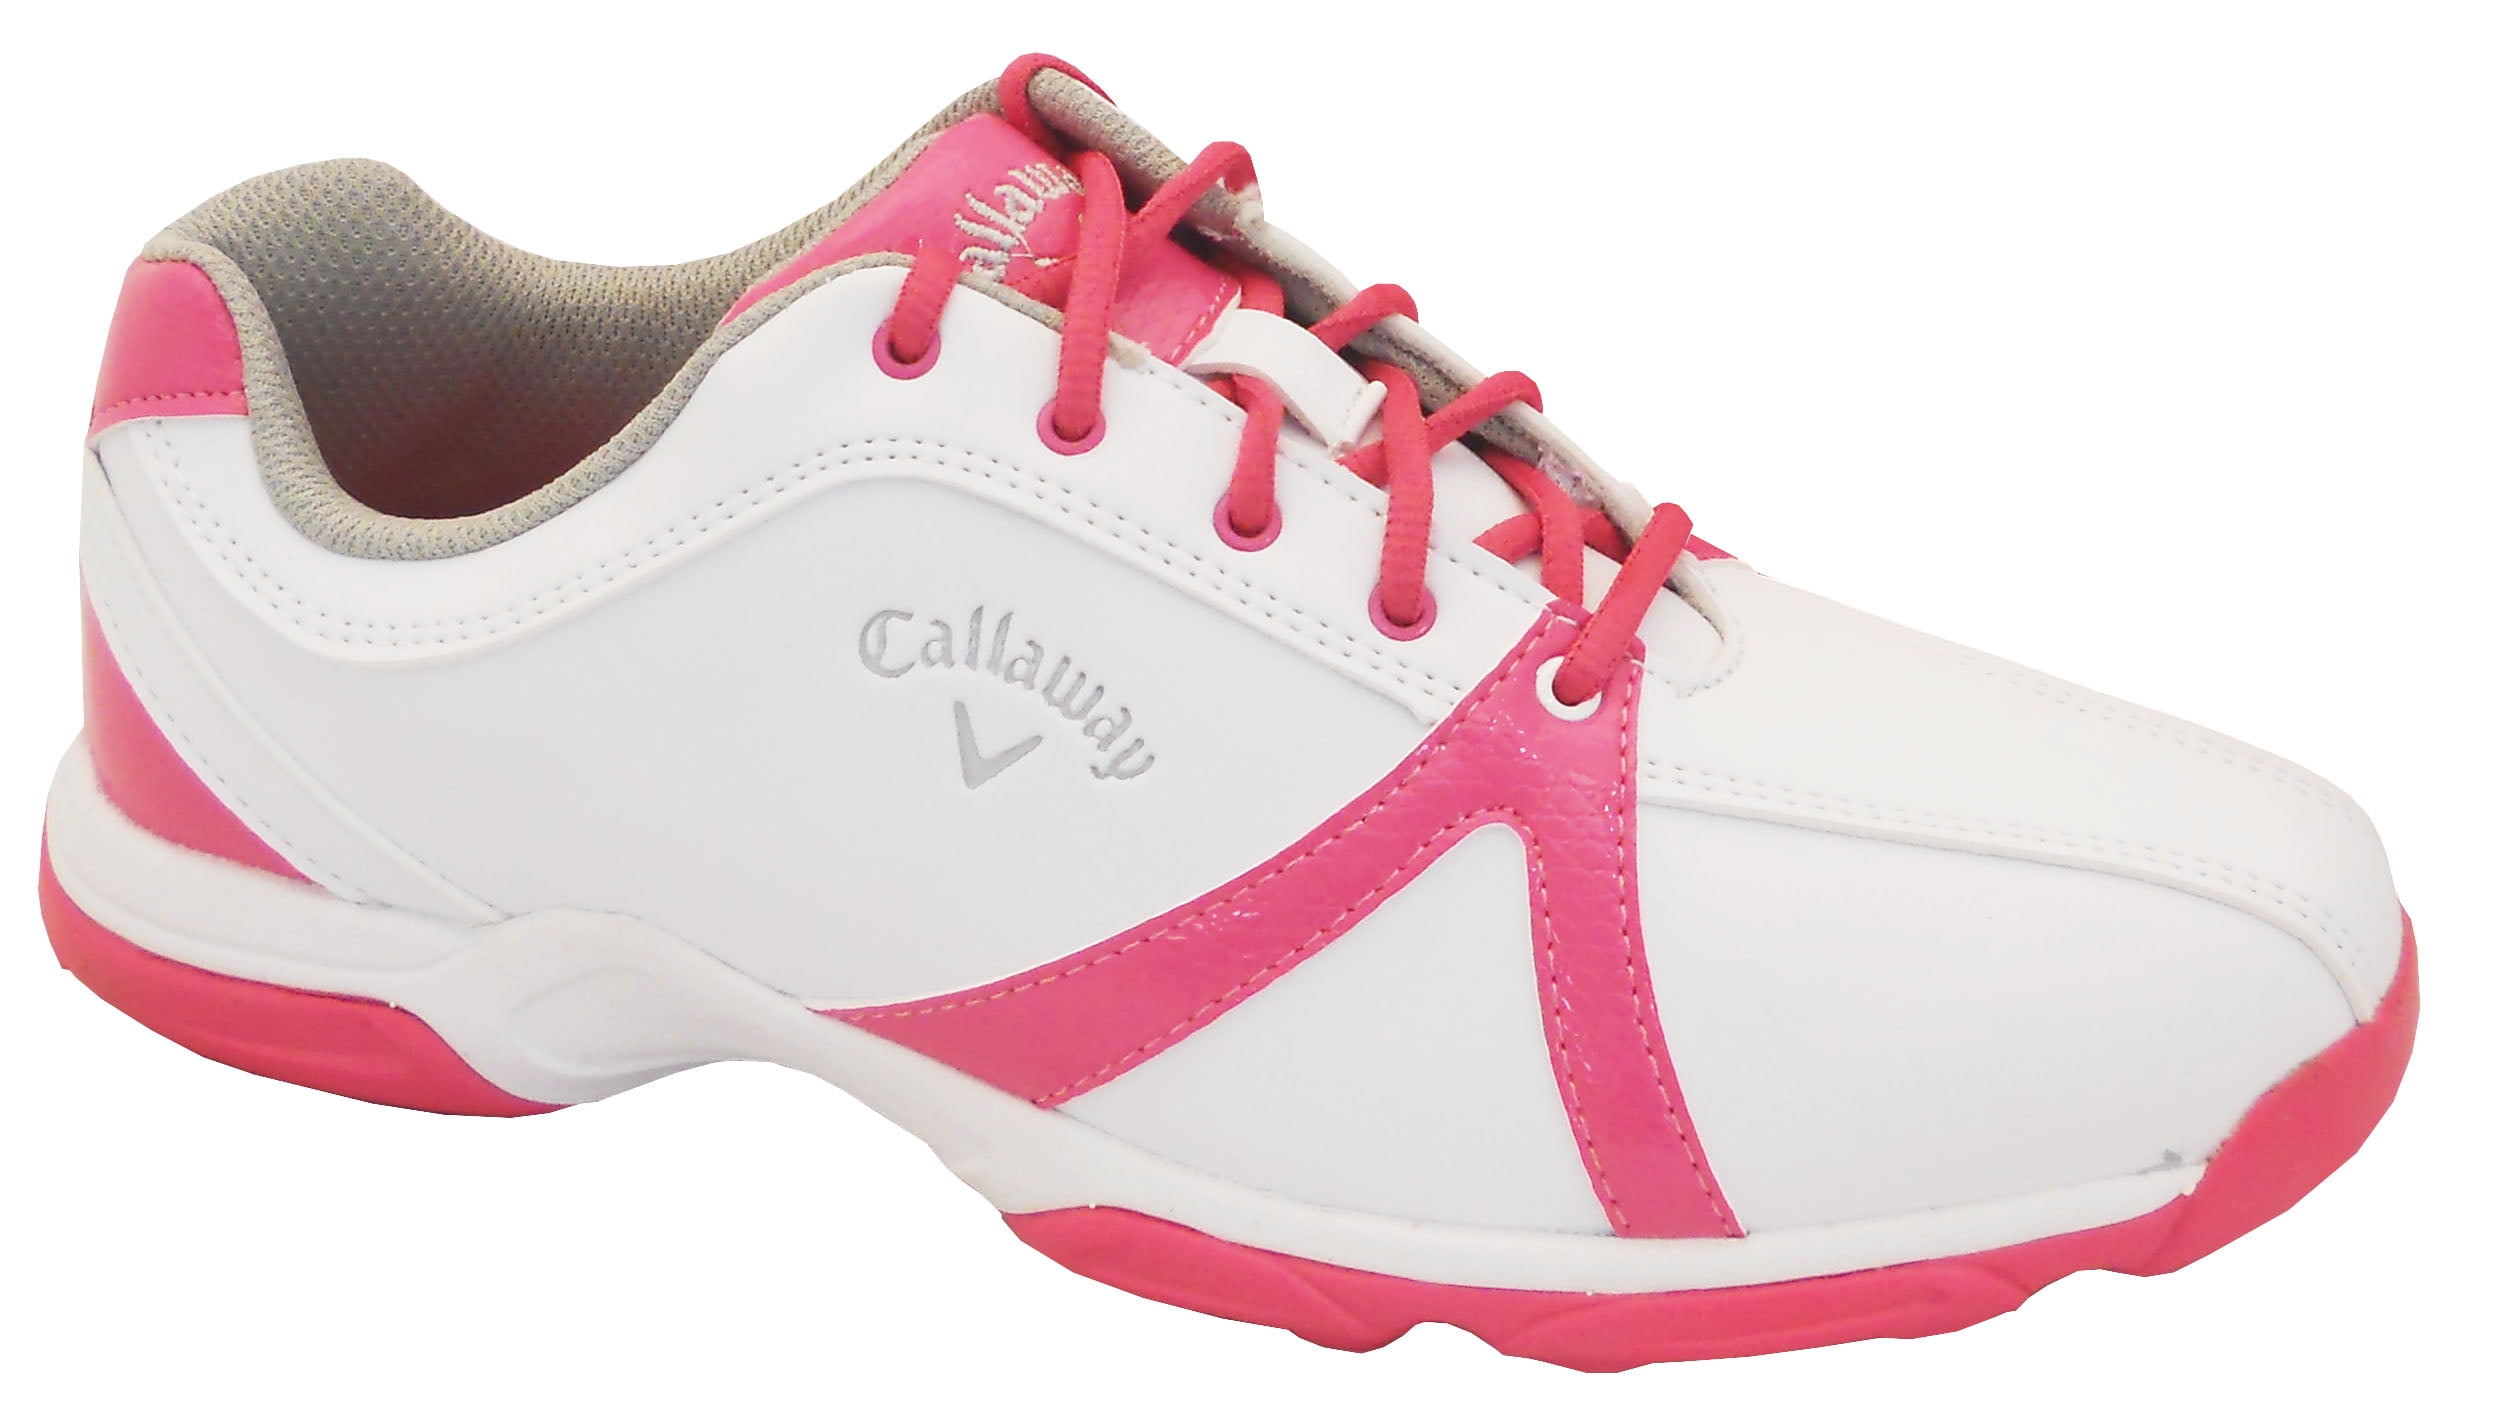 callaway cirrus golf shoes